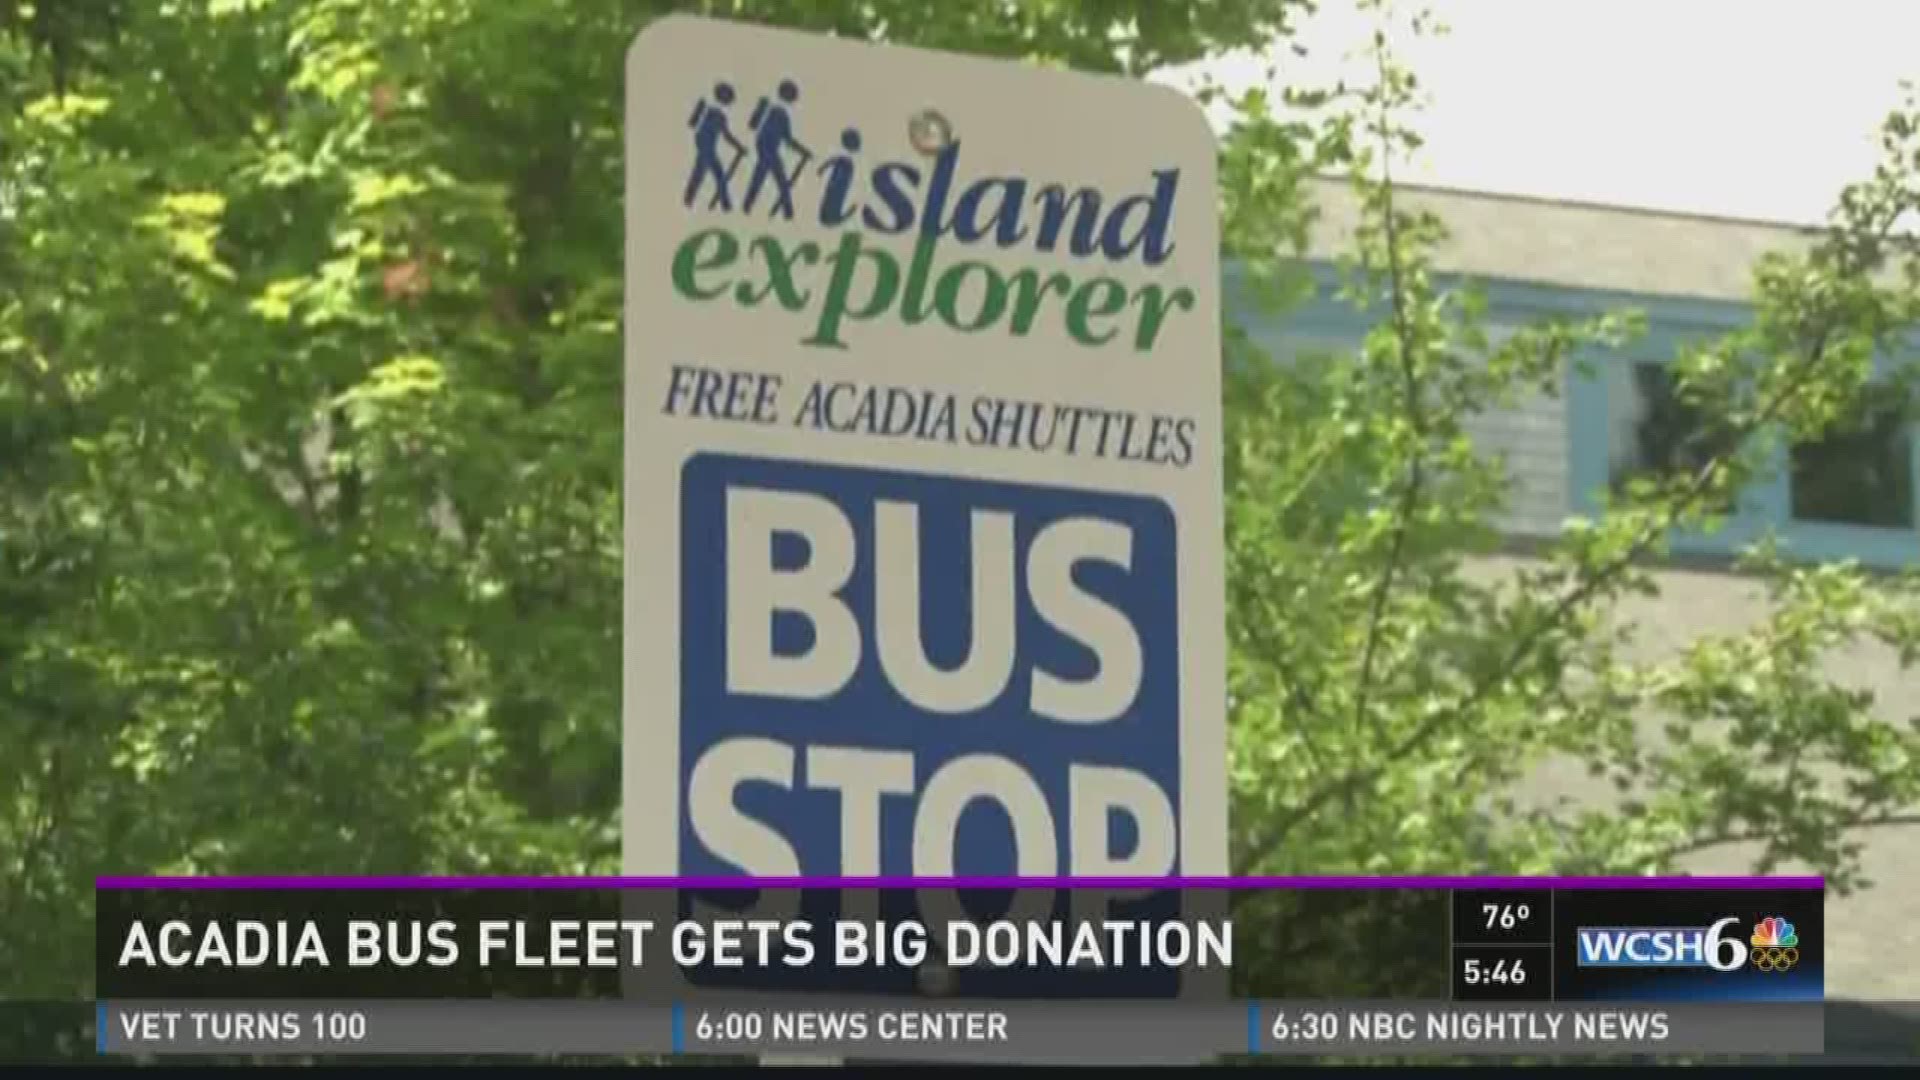 Acadia bus fleet gets big donation